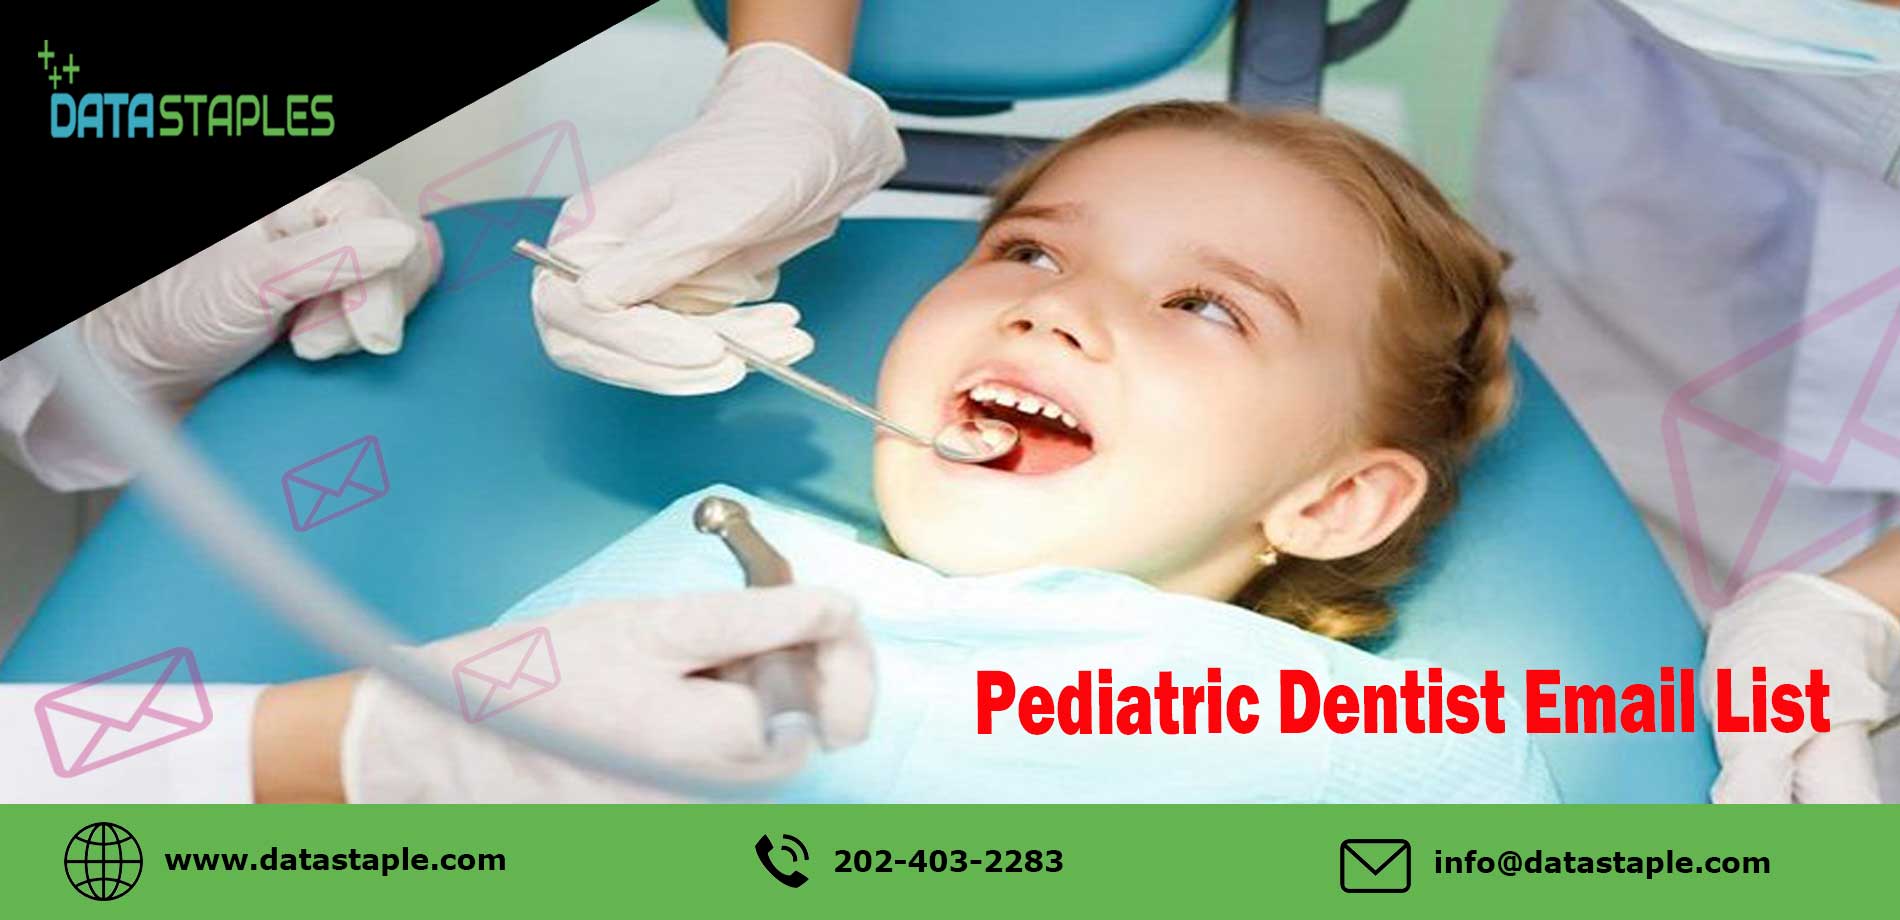 Pediatric Dentist Email List | DataStaples